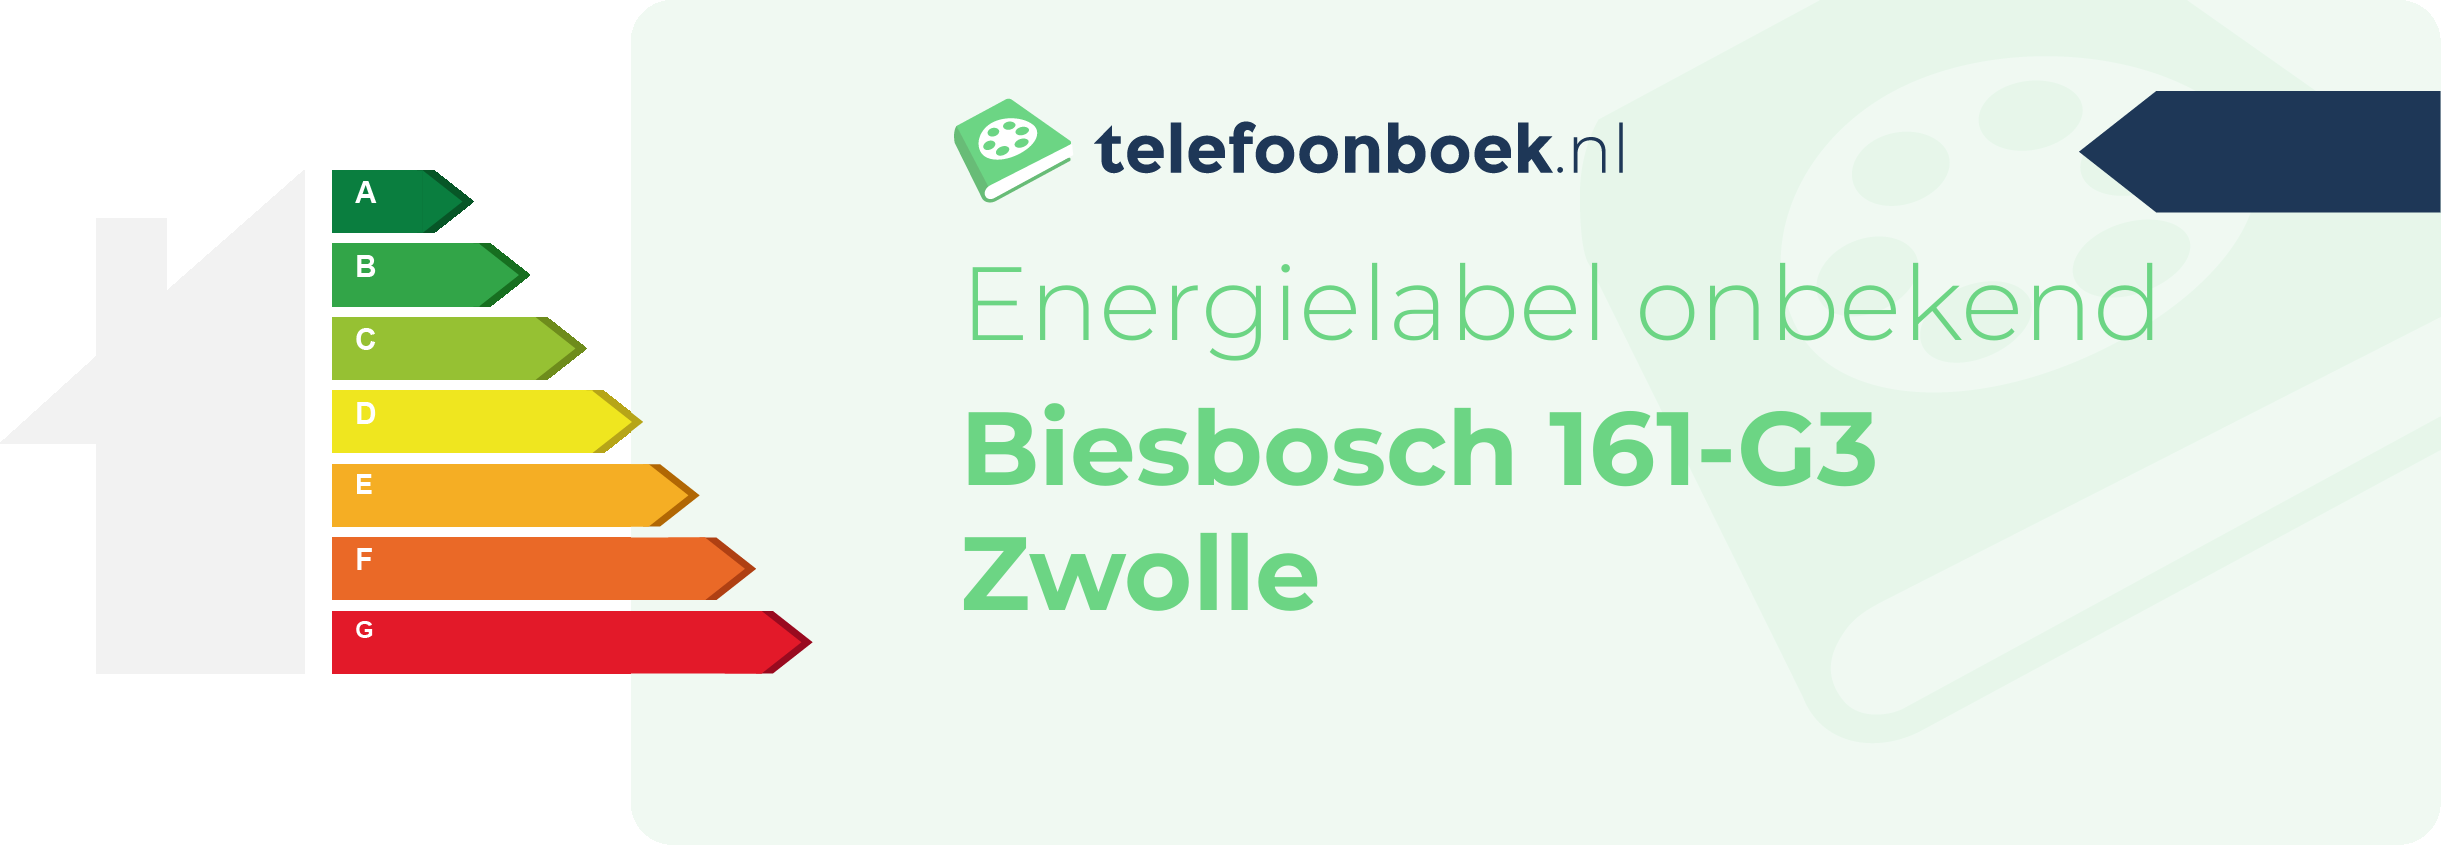 Energielabel Biesbosch 161-G3 Zwolle